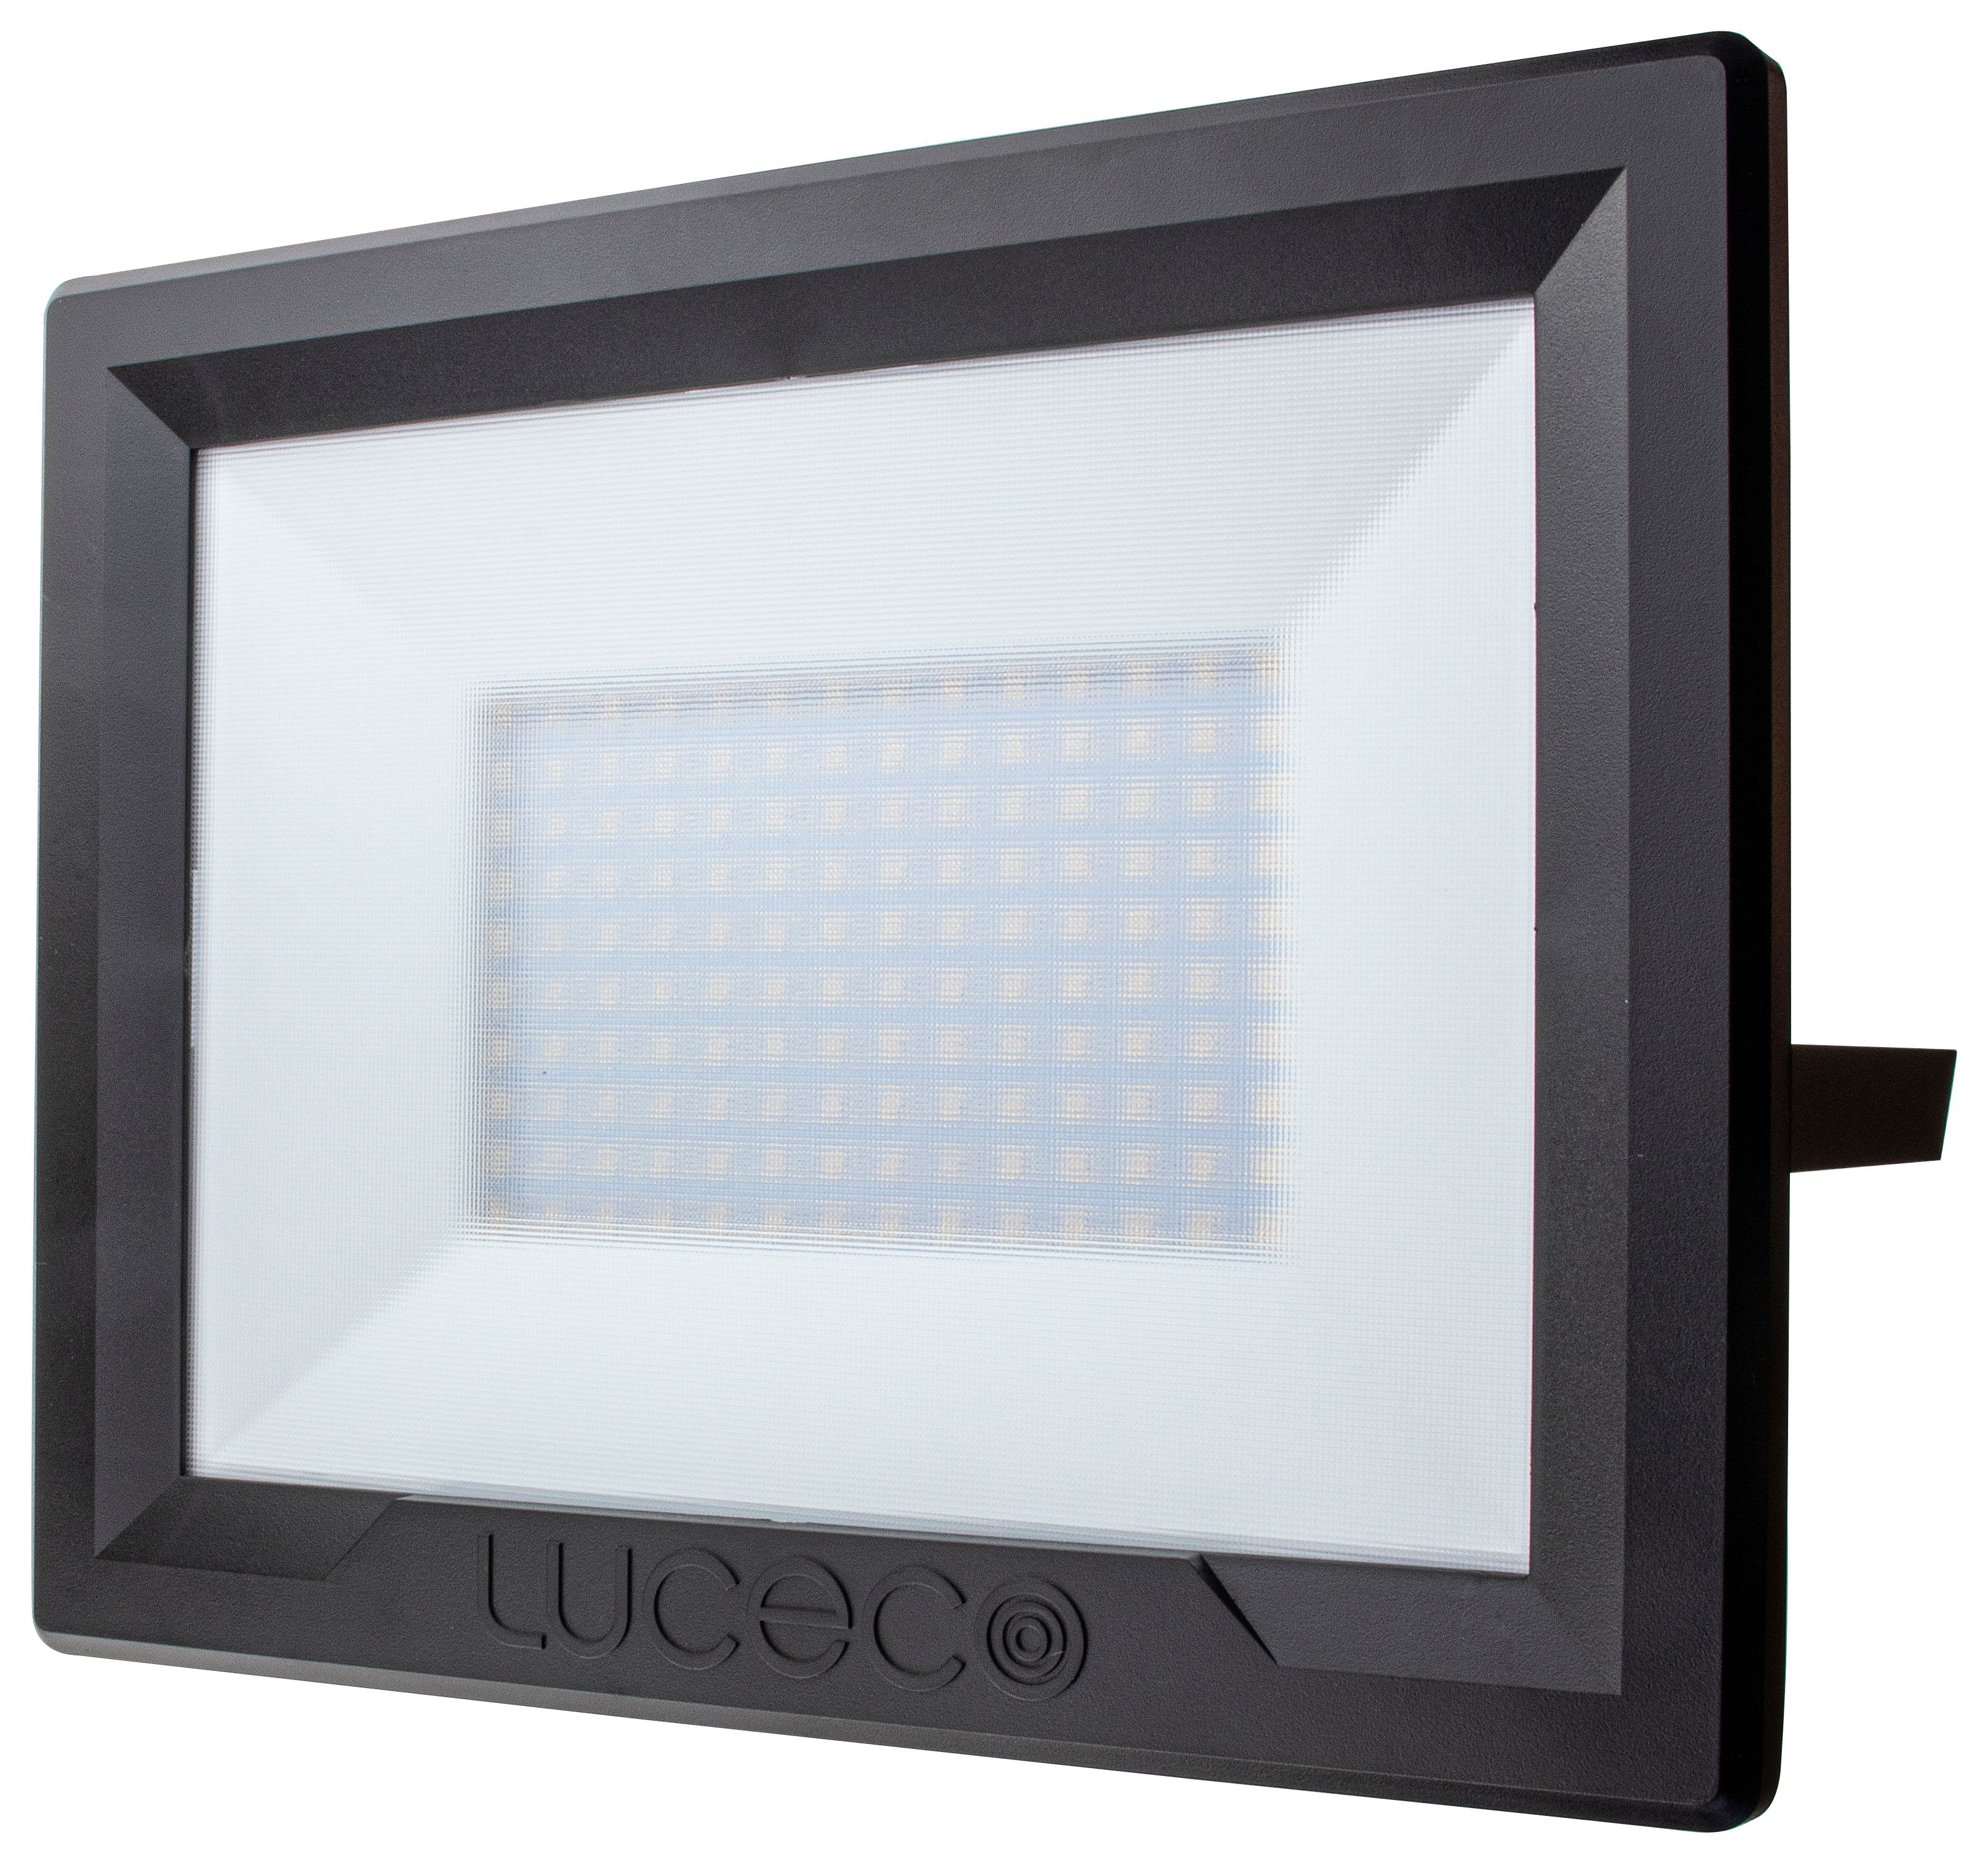 Luceco Eco IP65 Black 7500LM Flood Light -